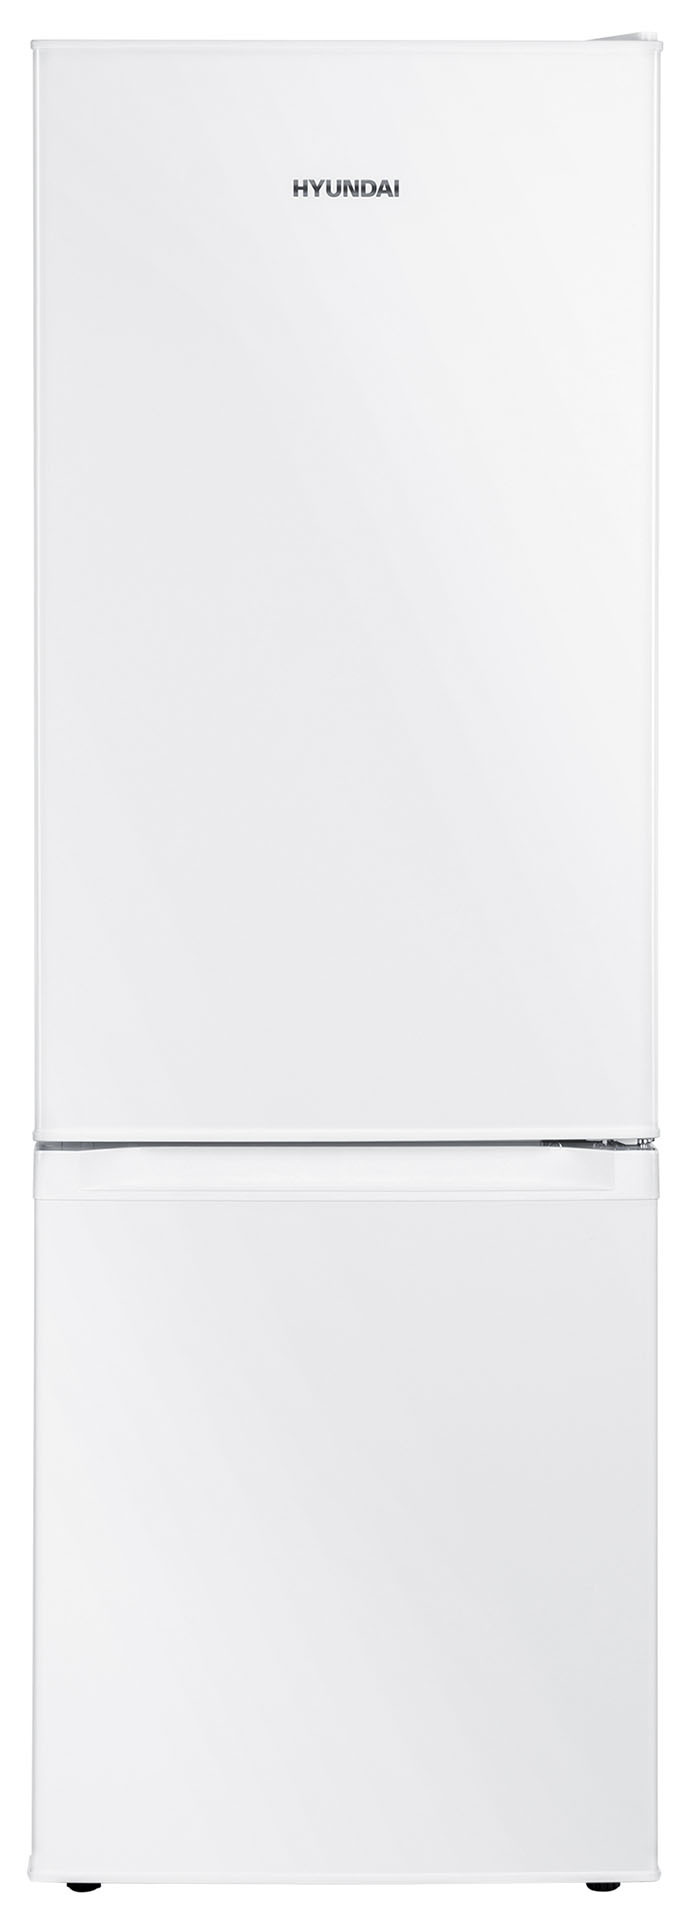 Холодильник HYUNDAI CC2051WT белый двухкамерный холодильник hyundai ct5046fdx